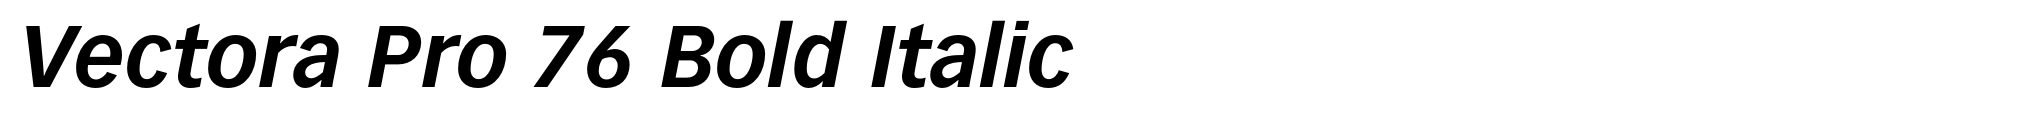 Vectora Pro 76 Bold Italic image